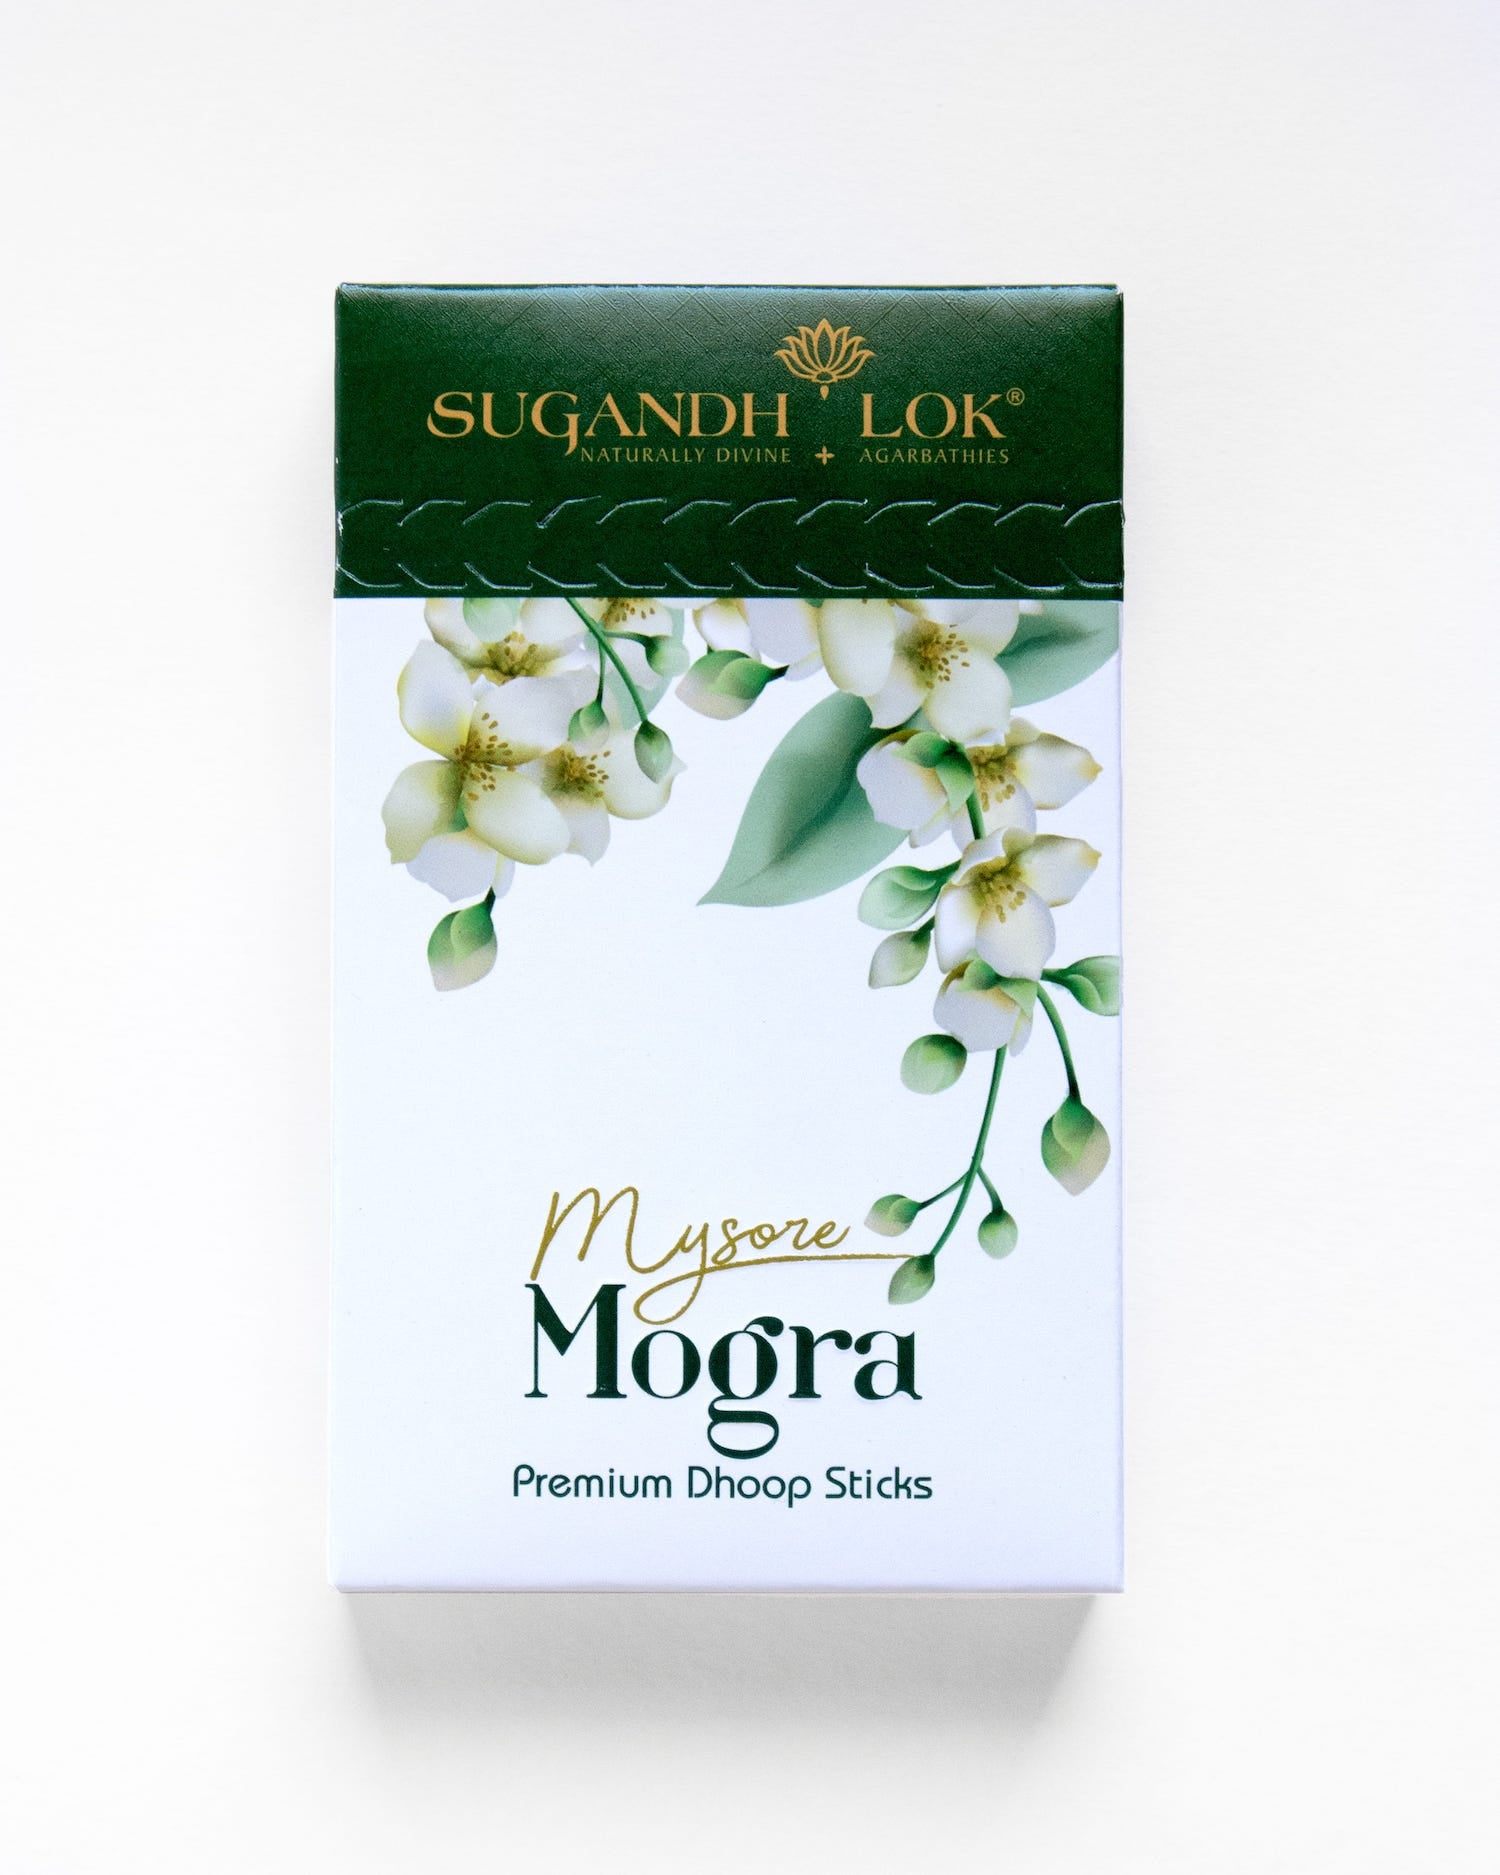 Mysore Mogra Dhoop Sticks - Premium Dhoop Sticks by SugandhLok